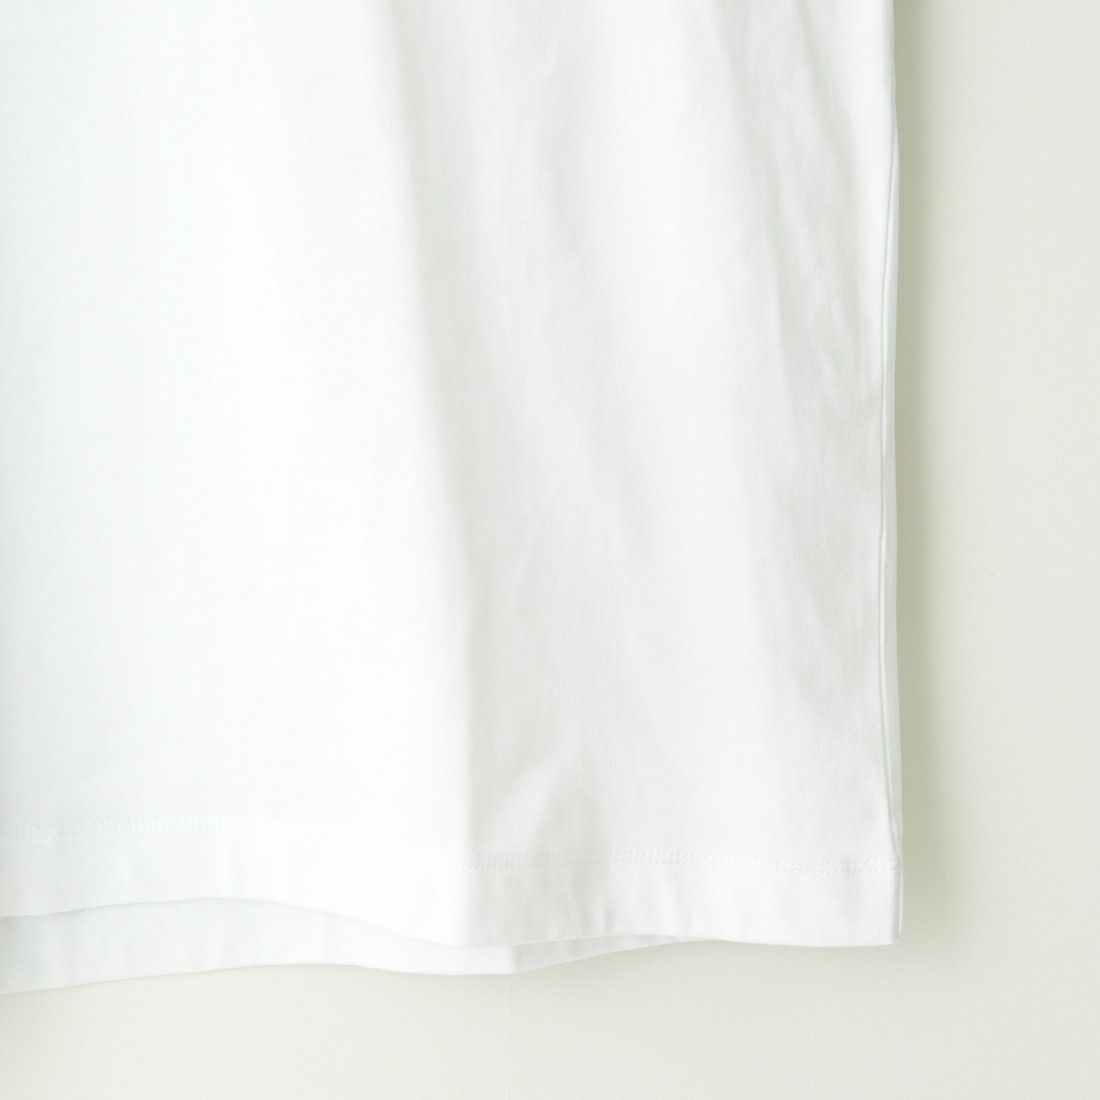 SLICK [スリック] ドロップショルダープリントTシャツ UNITED [5255852] 900 WHITE